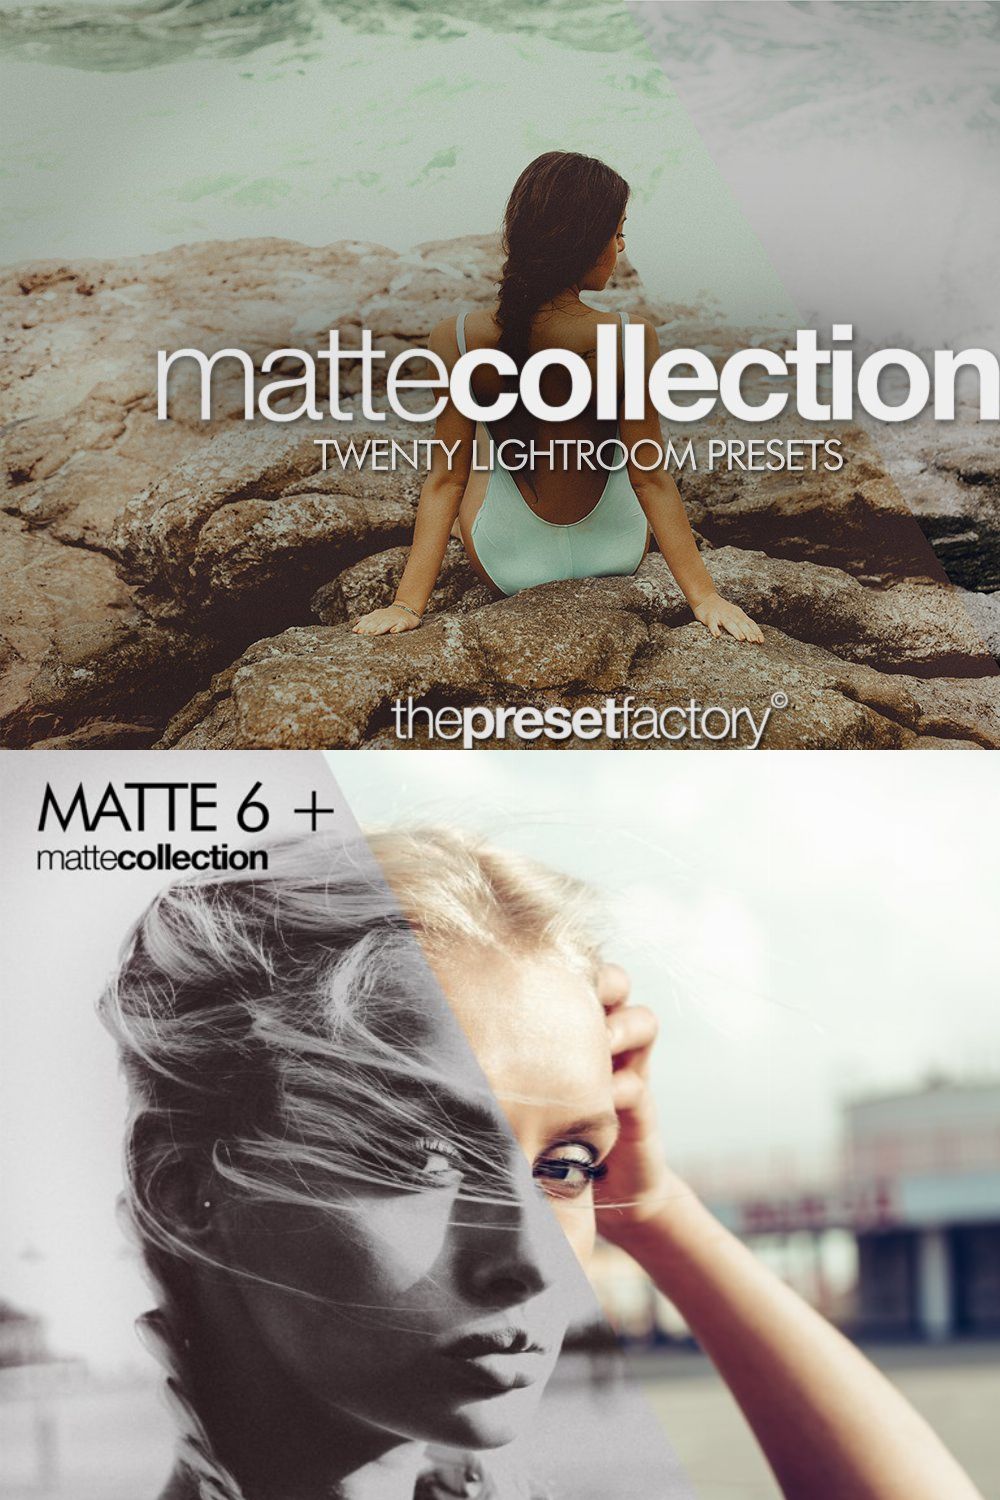 Matte Collection - Lightroom Presets pinterest preview image.